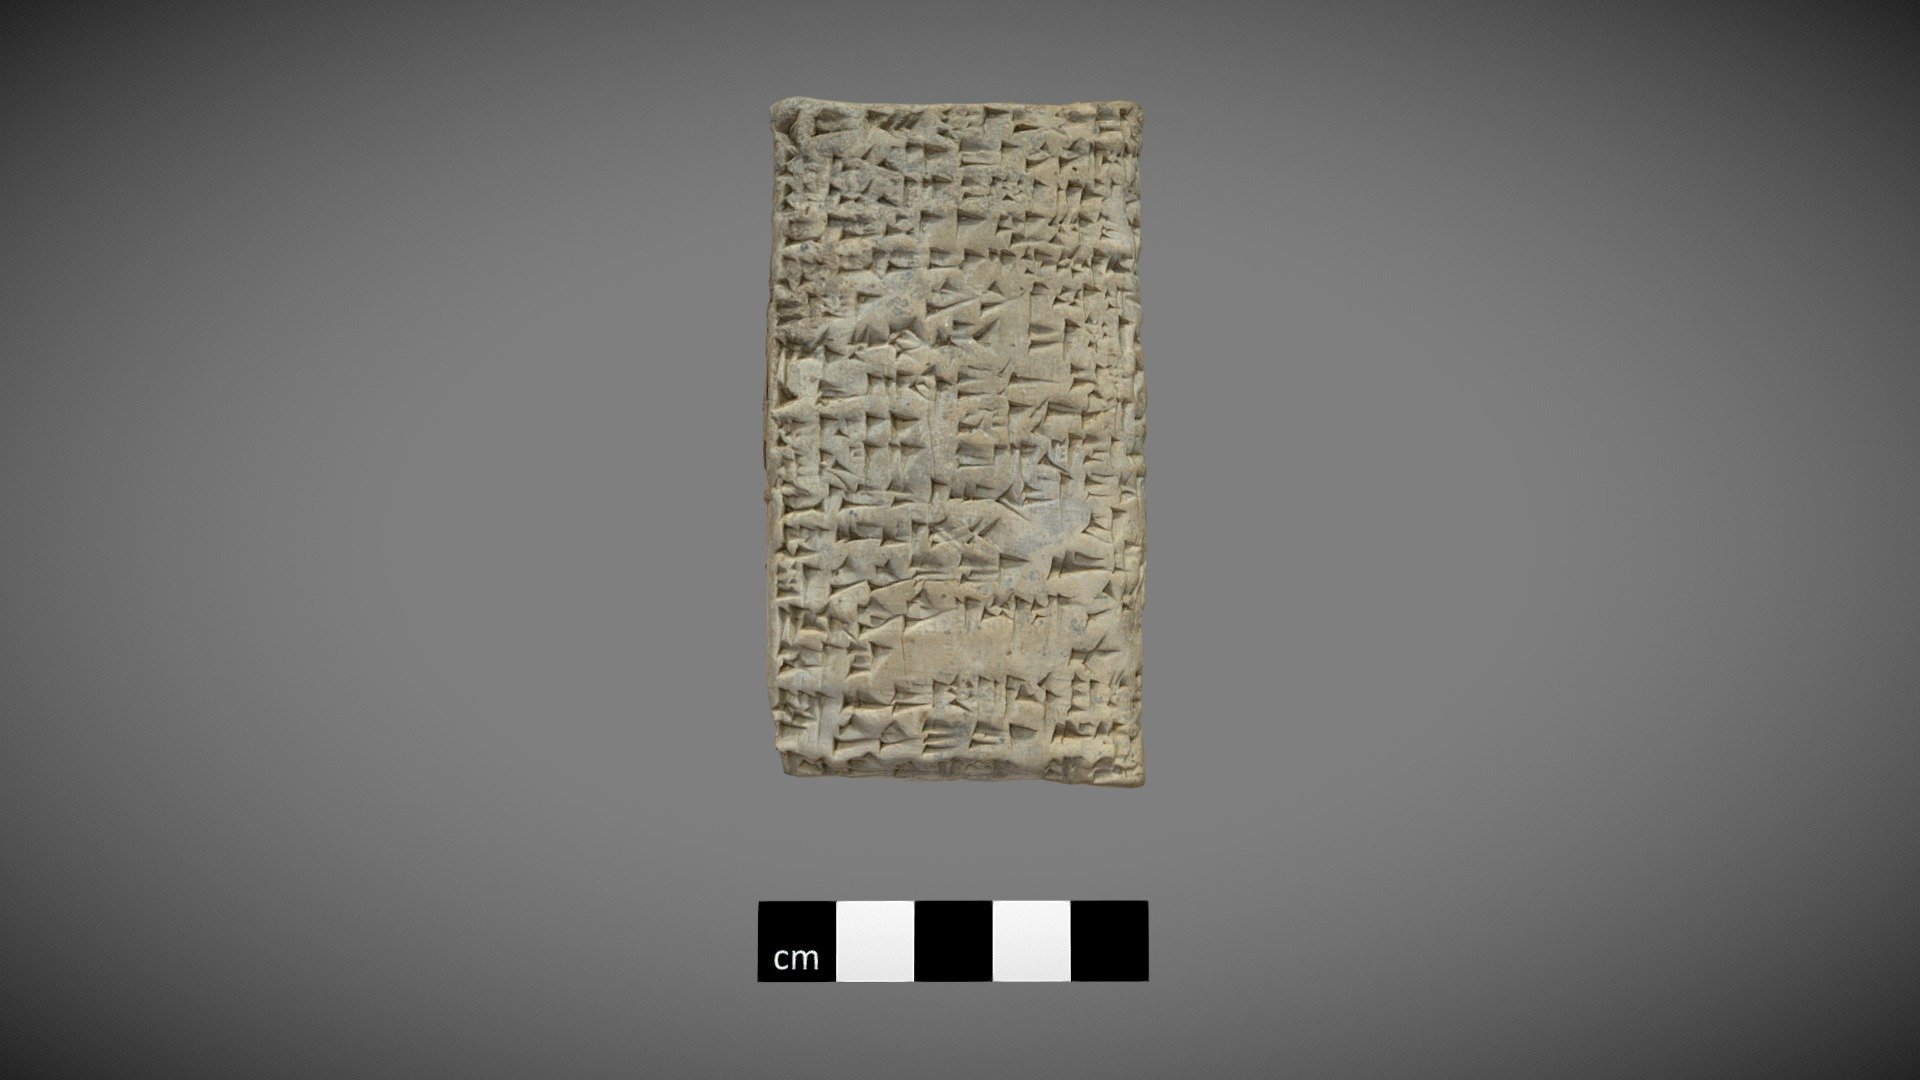 Savitaulu, clay tablet KM13631:1